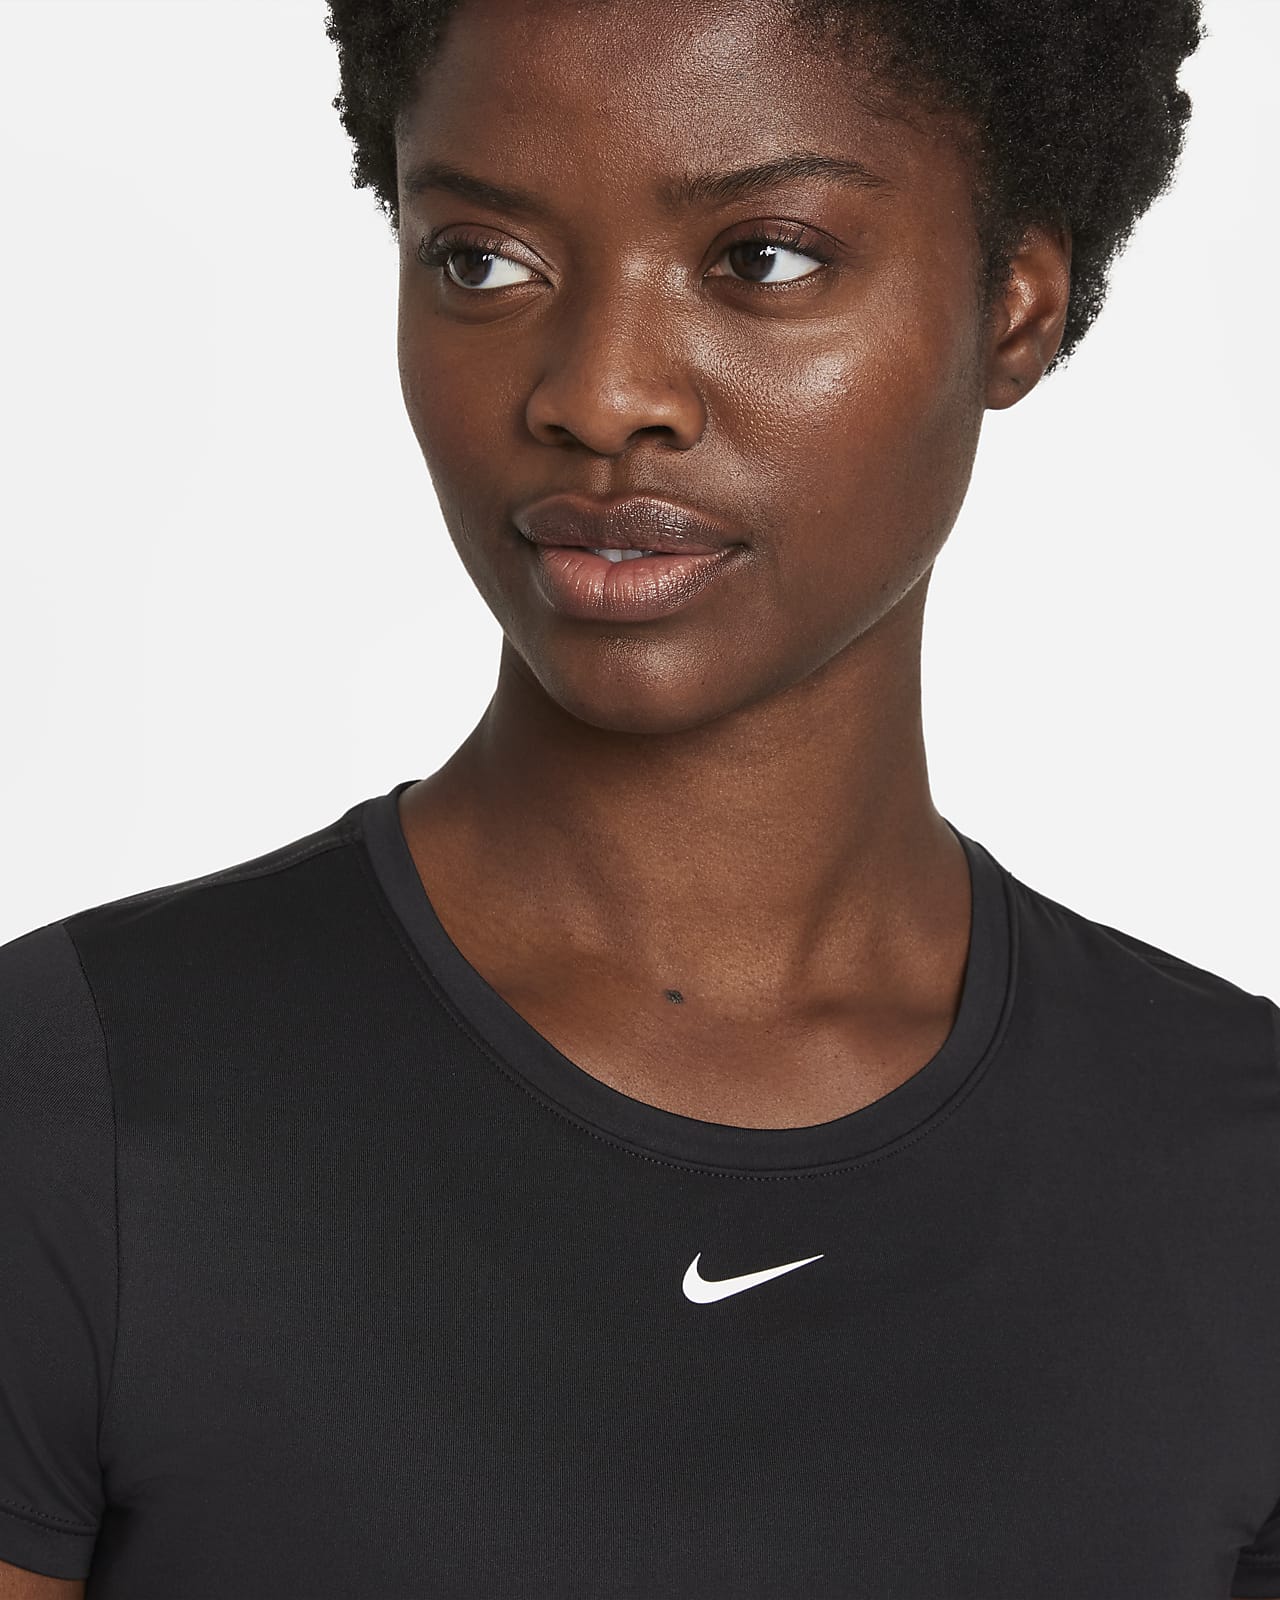 Nike Dri-FIT One Women's Slim-Fit Short-Sleeve Top